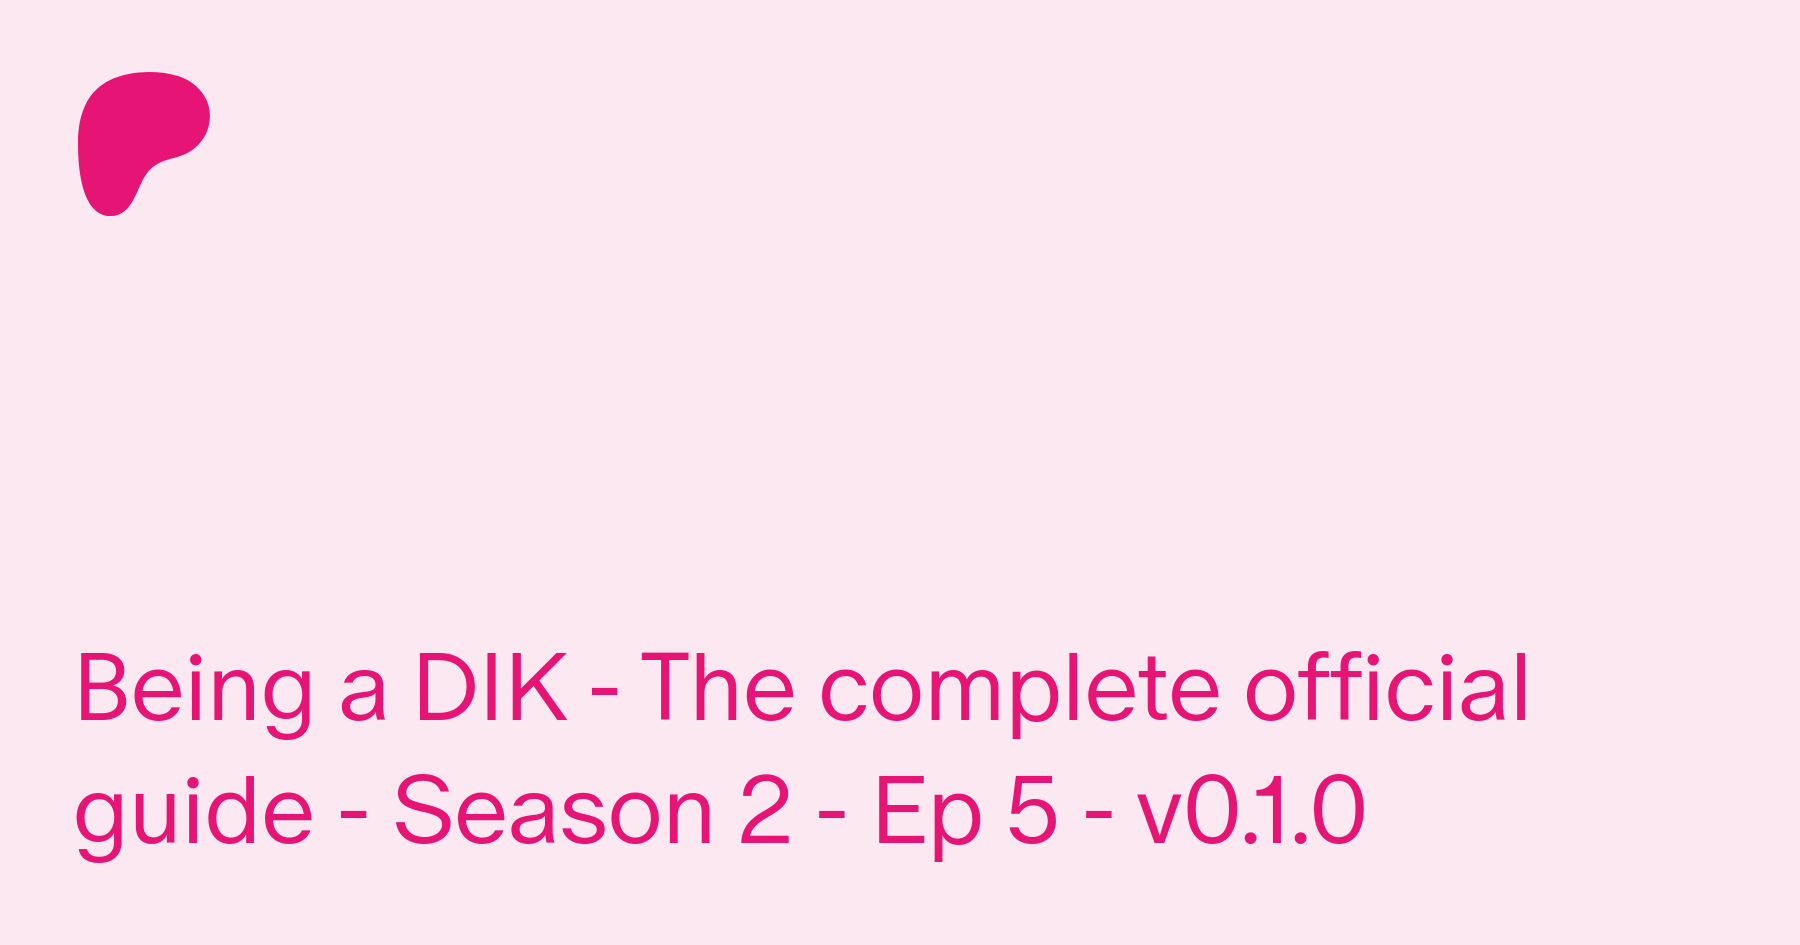 Being a dik season 2 guide